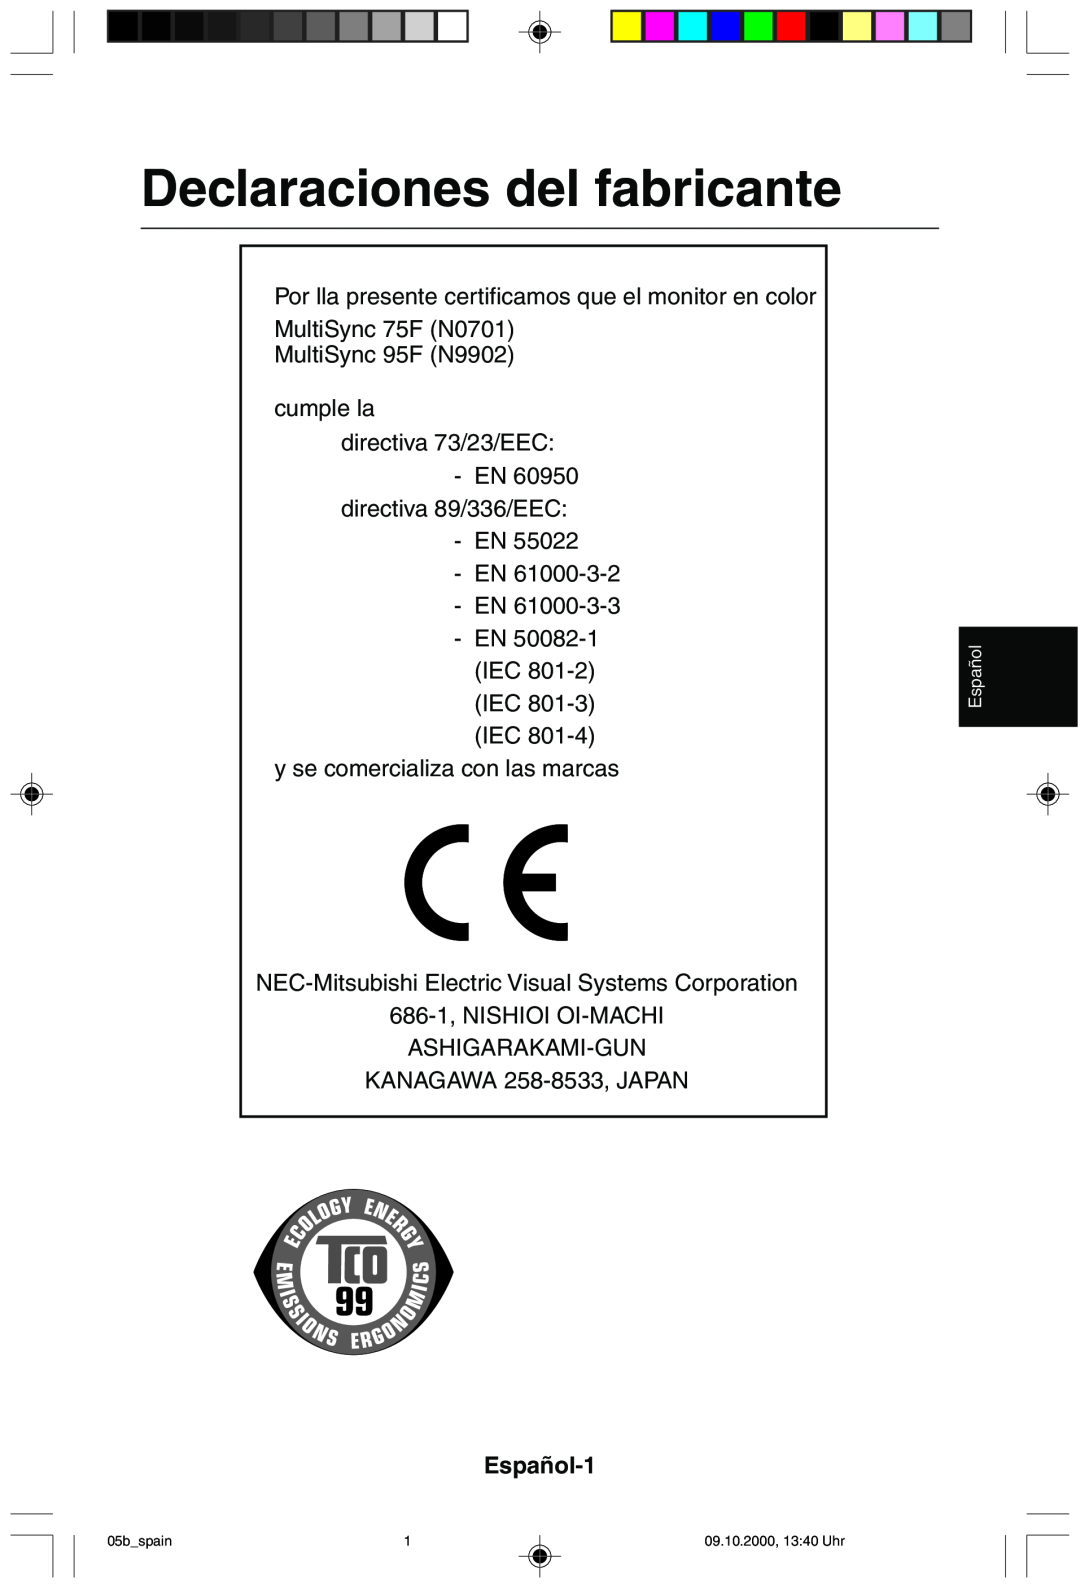 NEC 95F user manual Declaraciones del fabricante, Español-1, 05bspain, 09.10.2000, 1340 Uhr 